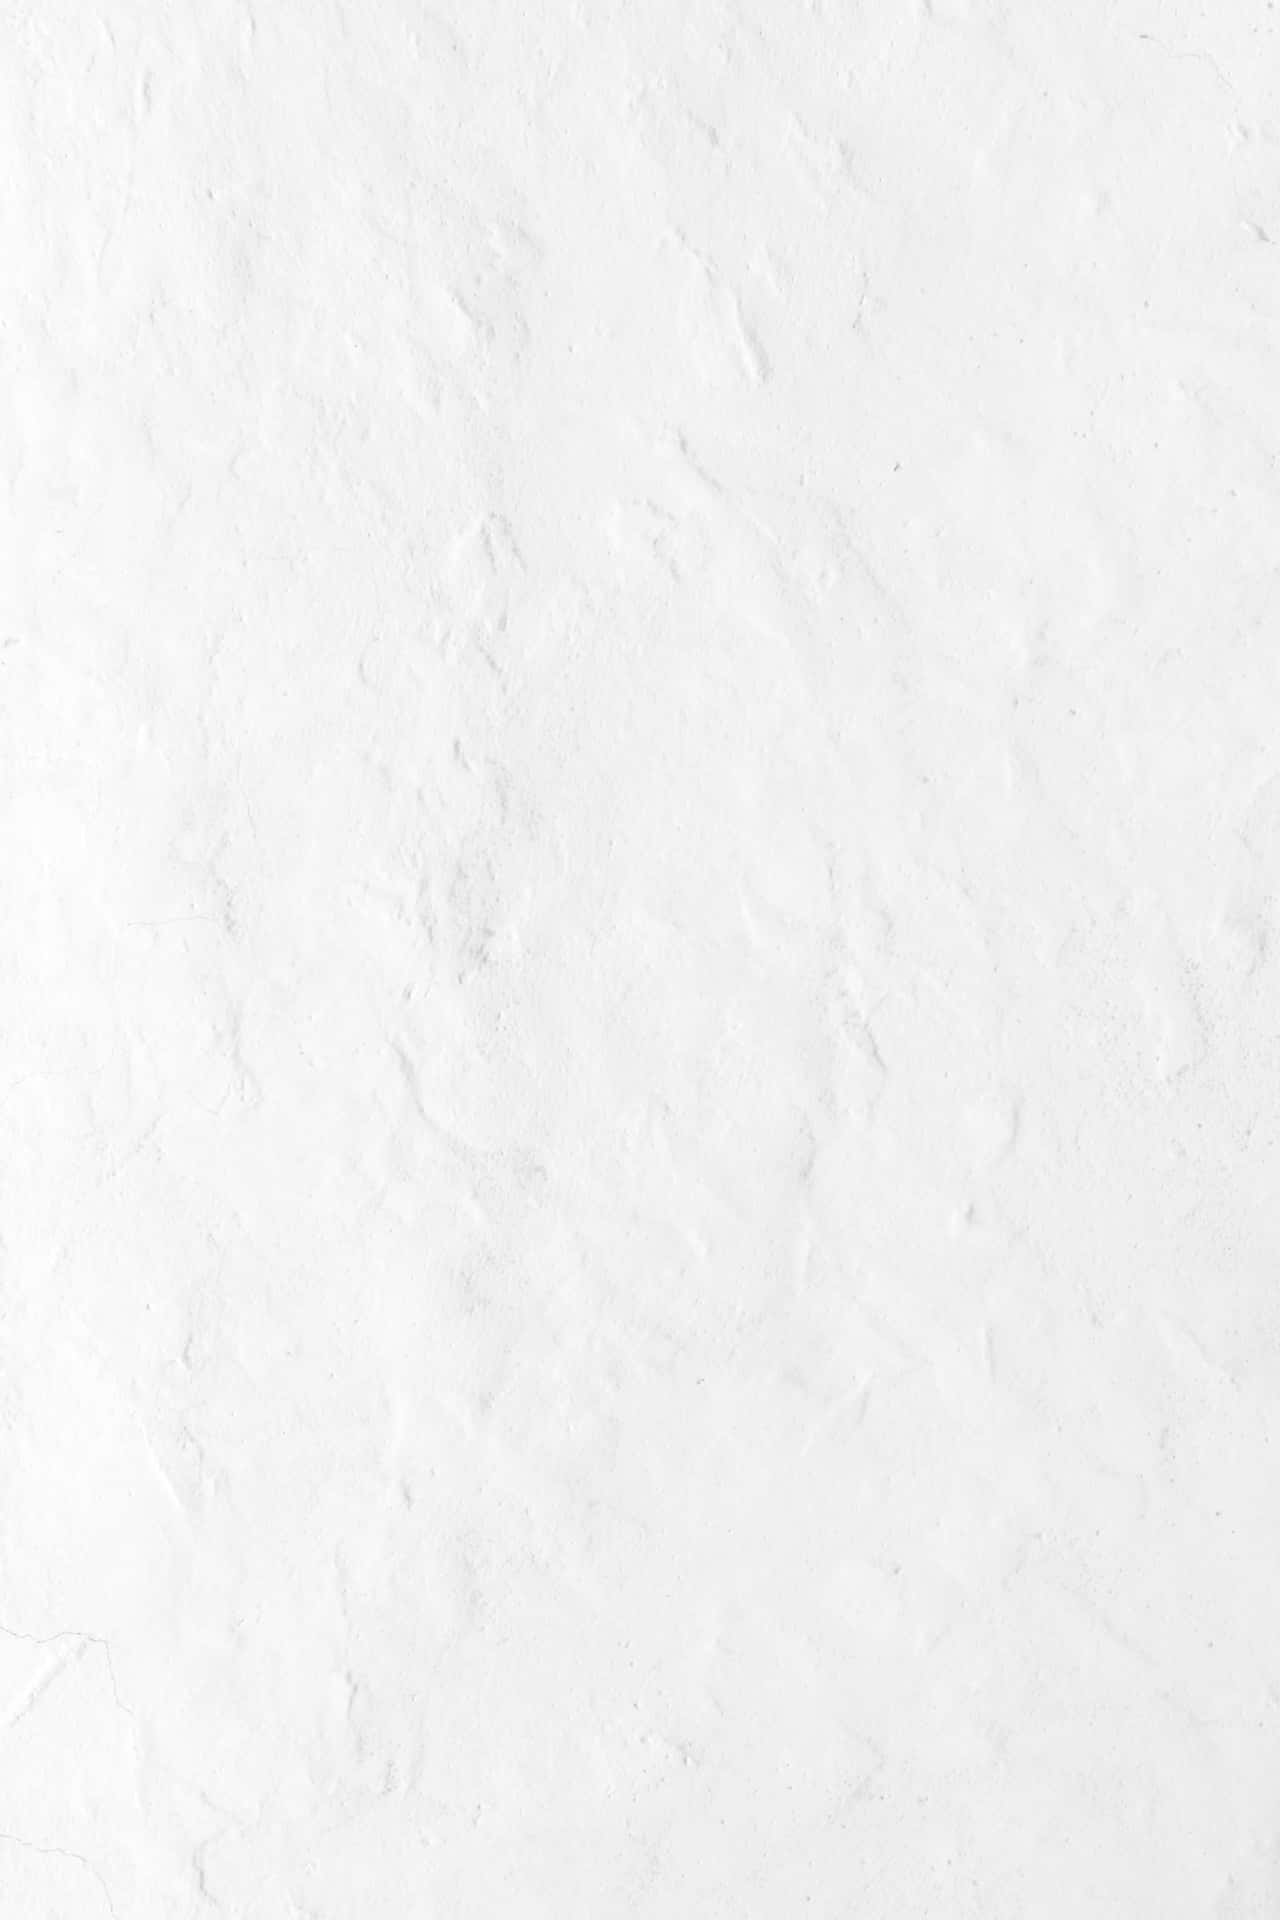 Elegant Simplicity: White Pattern Background